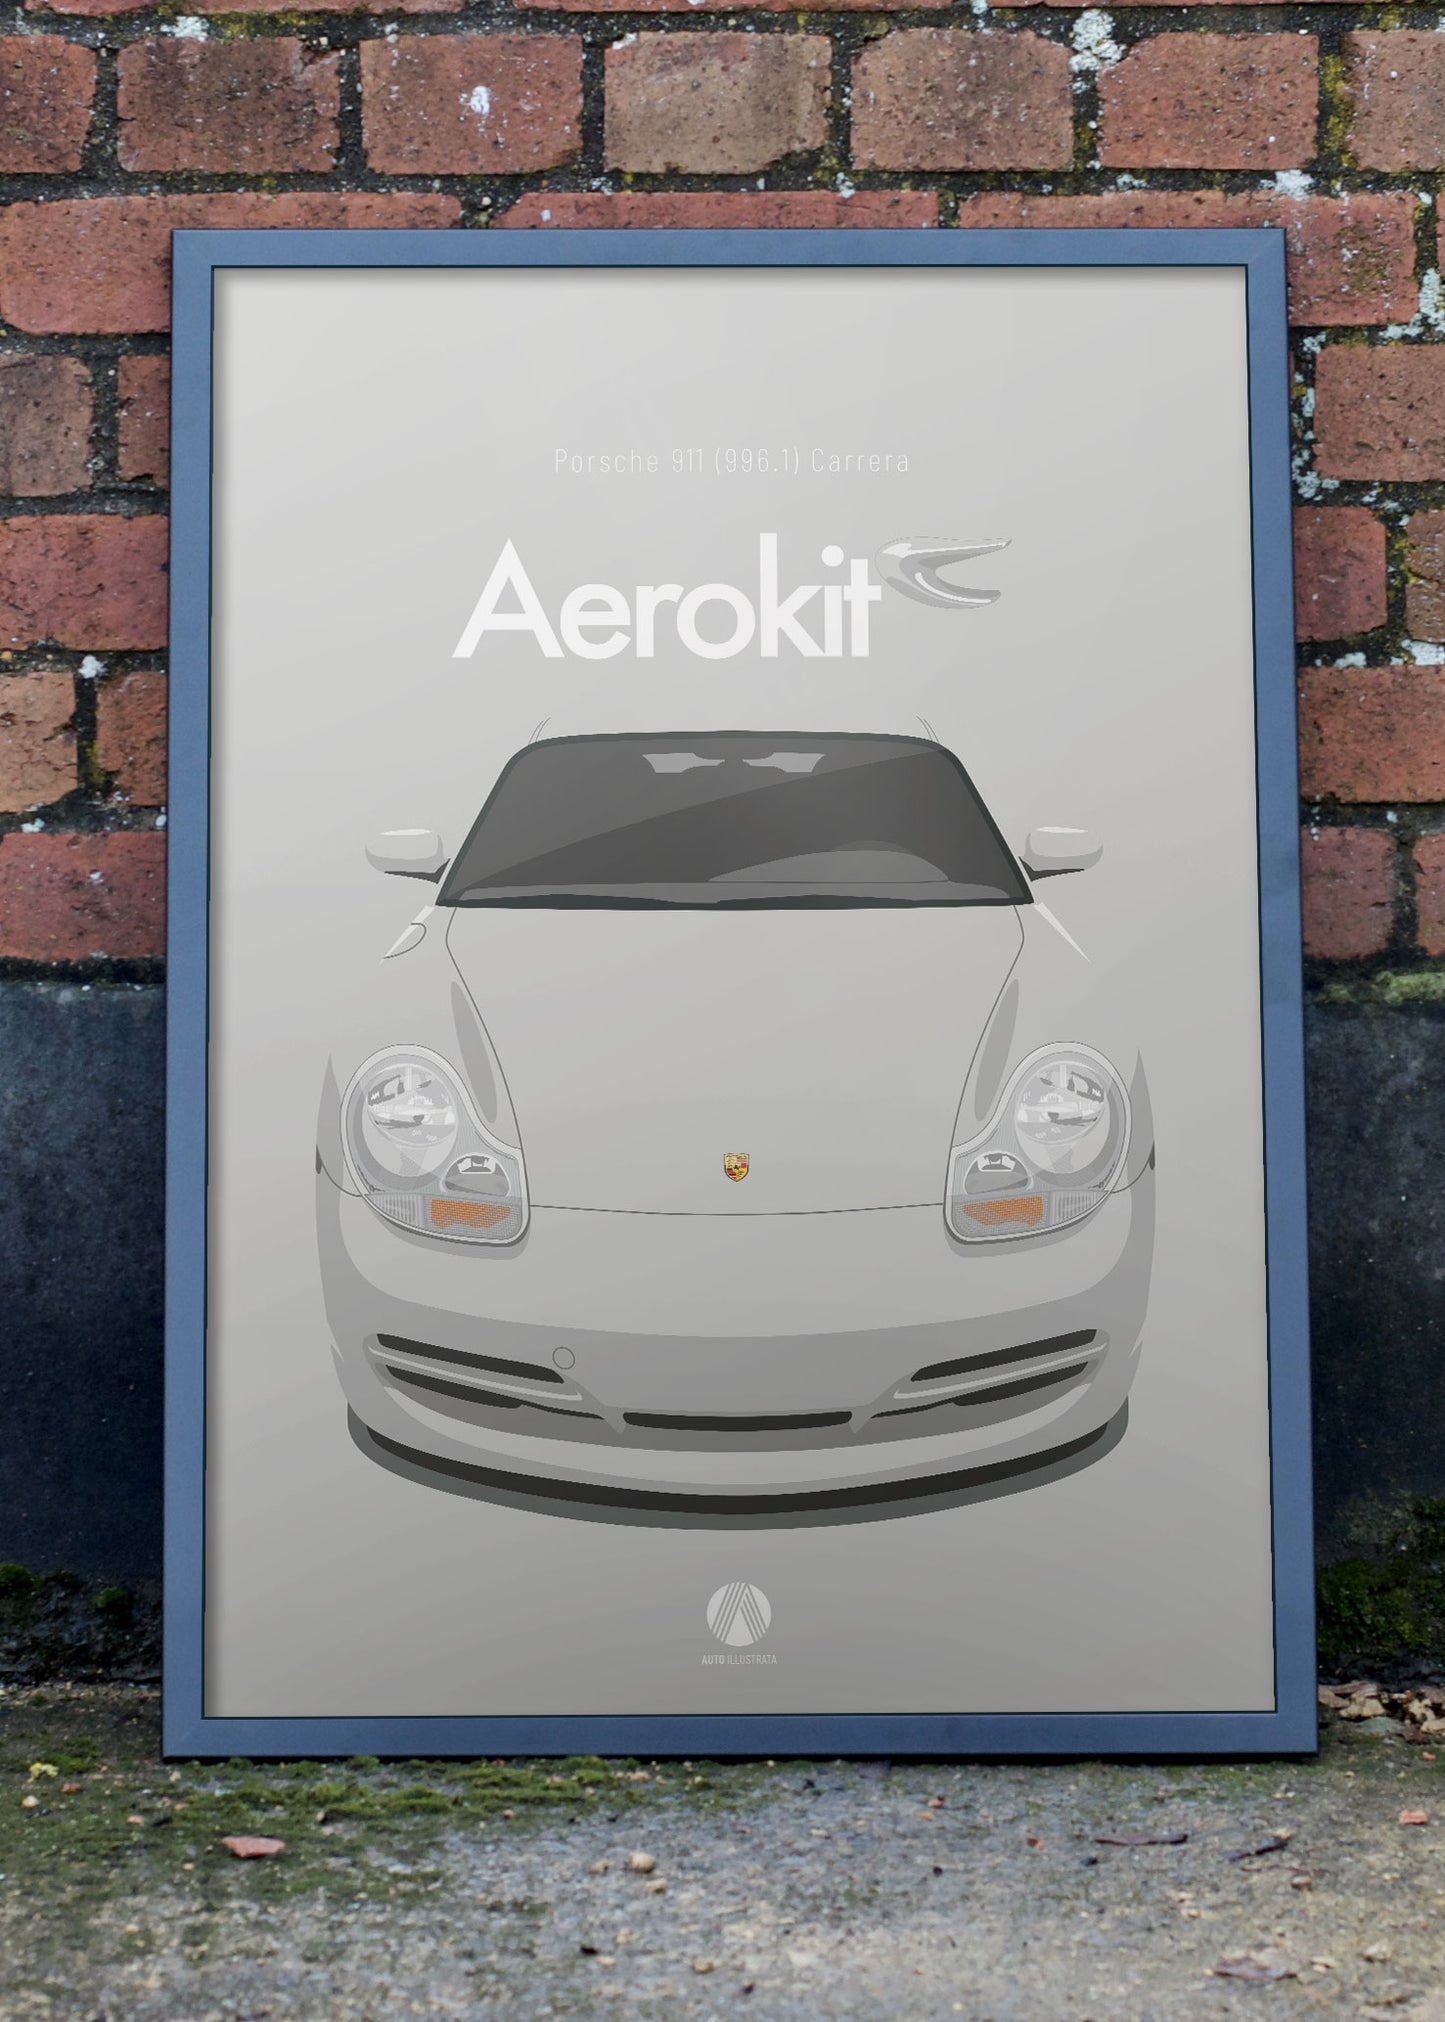 1997 Porsche 911 (996.1) Carrera Aerokit - Arctic Silver - poster print